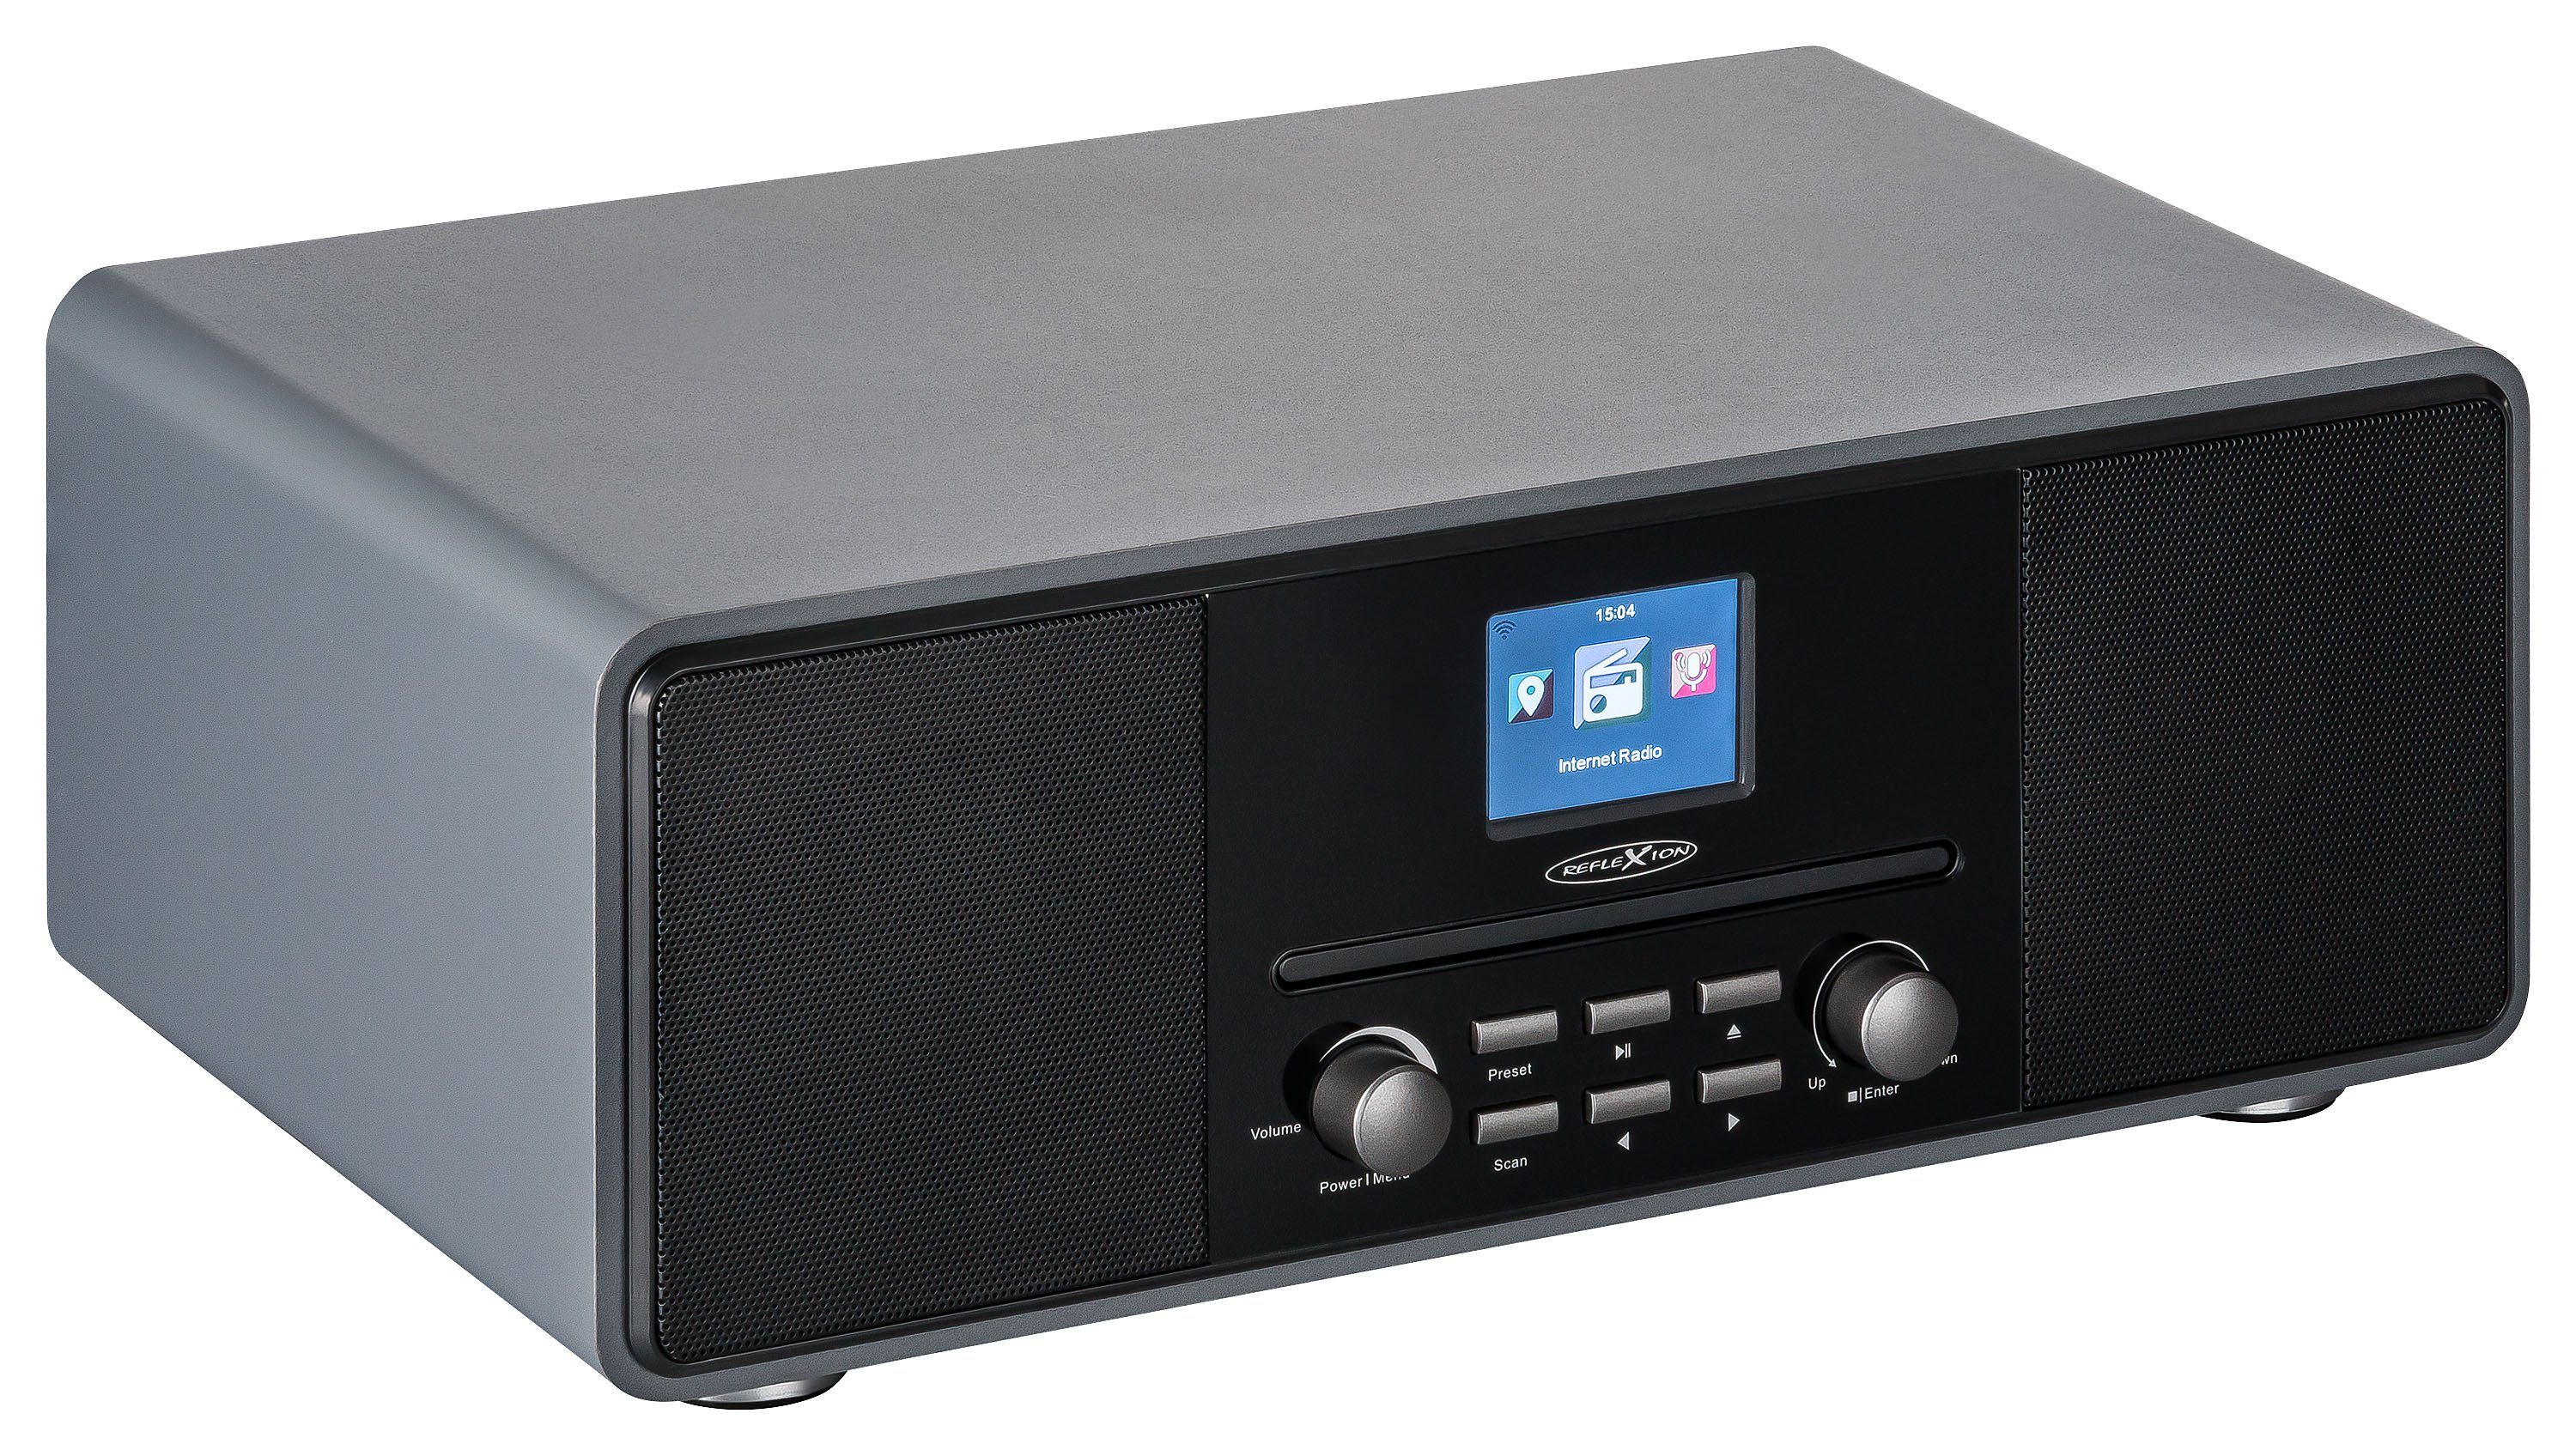 Reflexion HRA19INT Internet-Radio (Digitalradio (DAB), 160 W, 2,4" TFT Farbdisplay, Bluetooth, AUX-IN, Kopfhöreranschluss, WLAN) grau/anthrazit